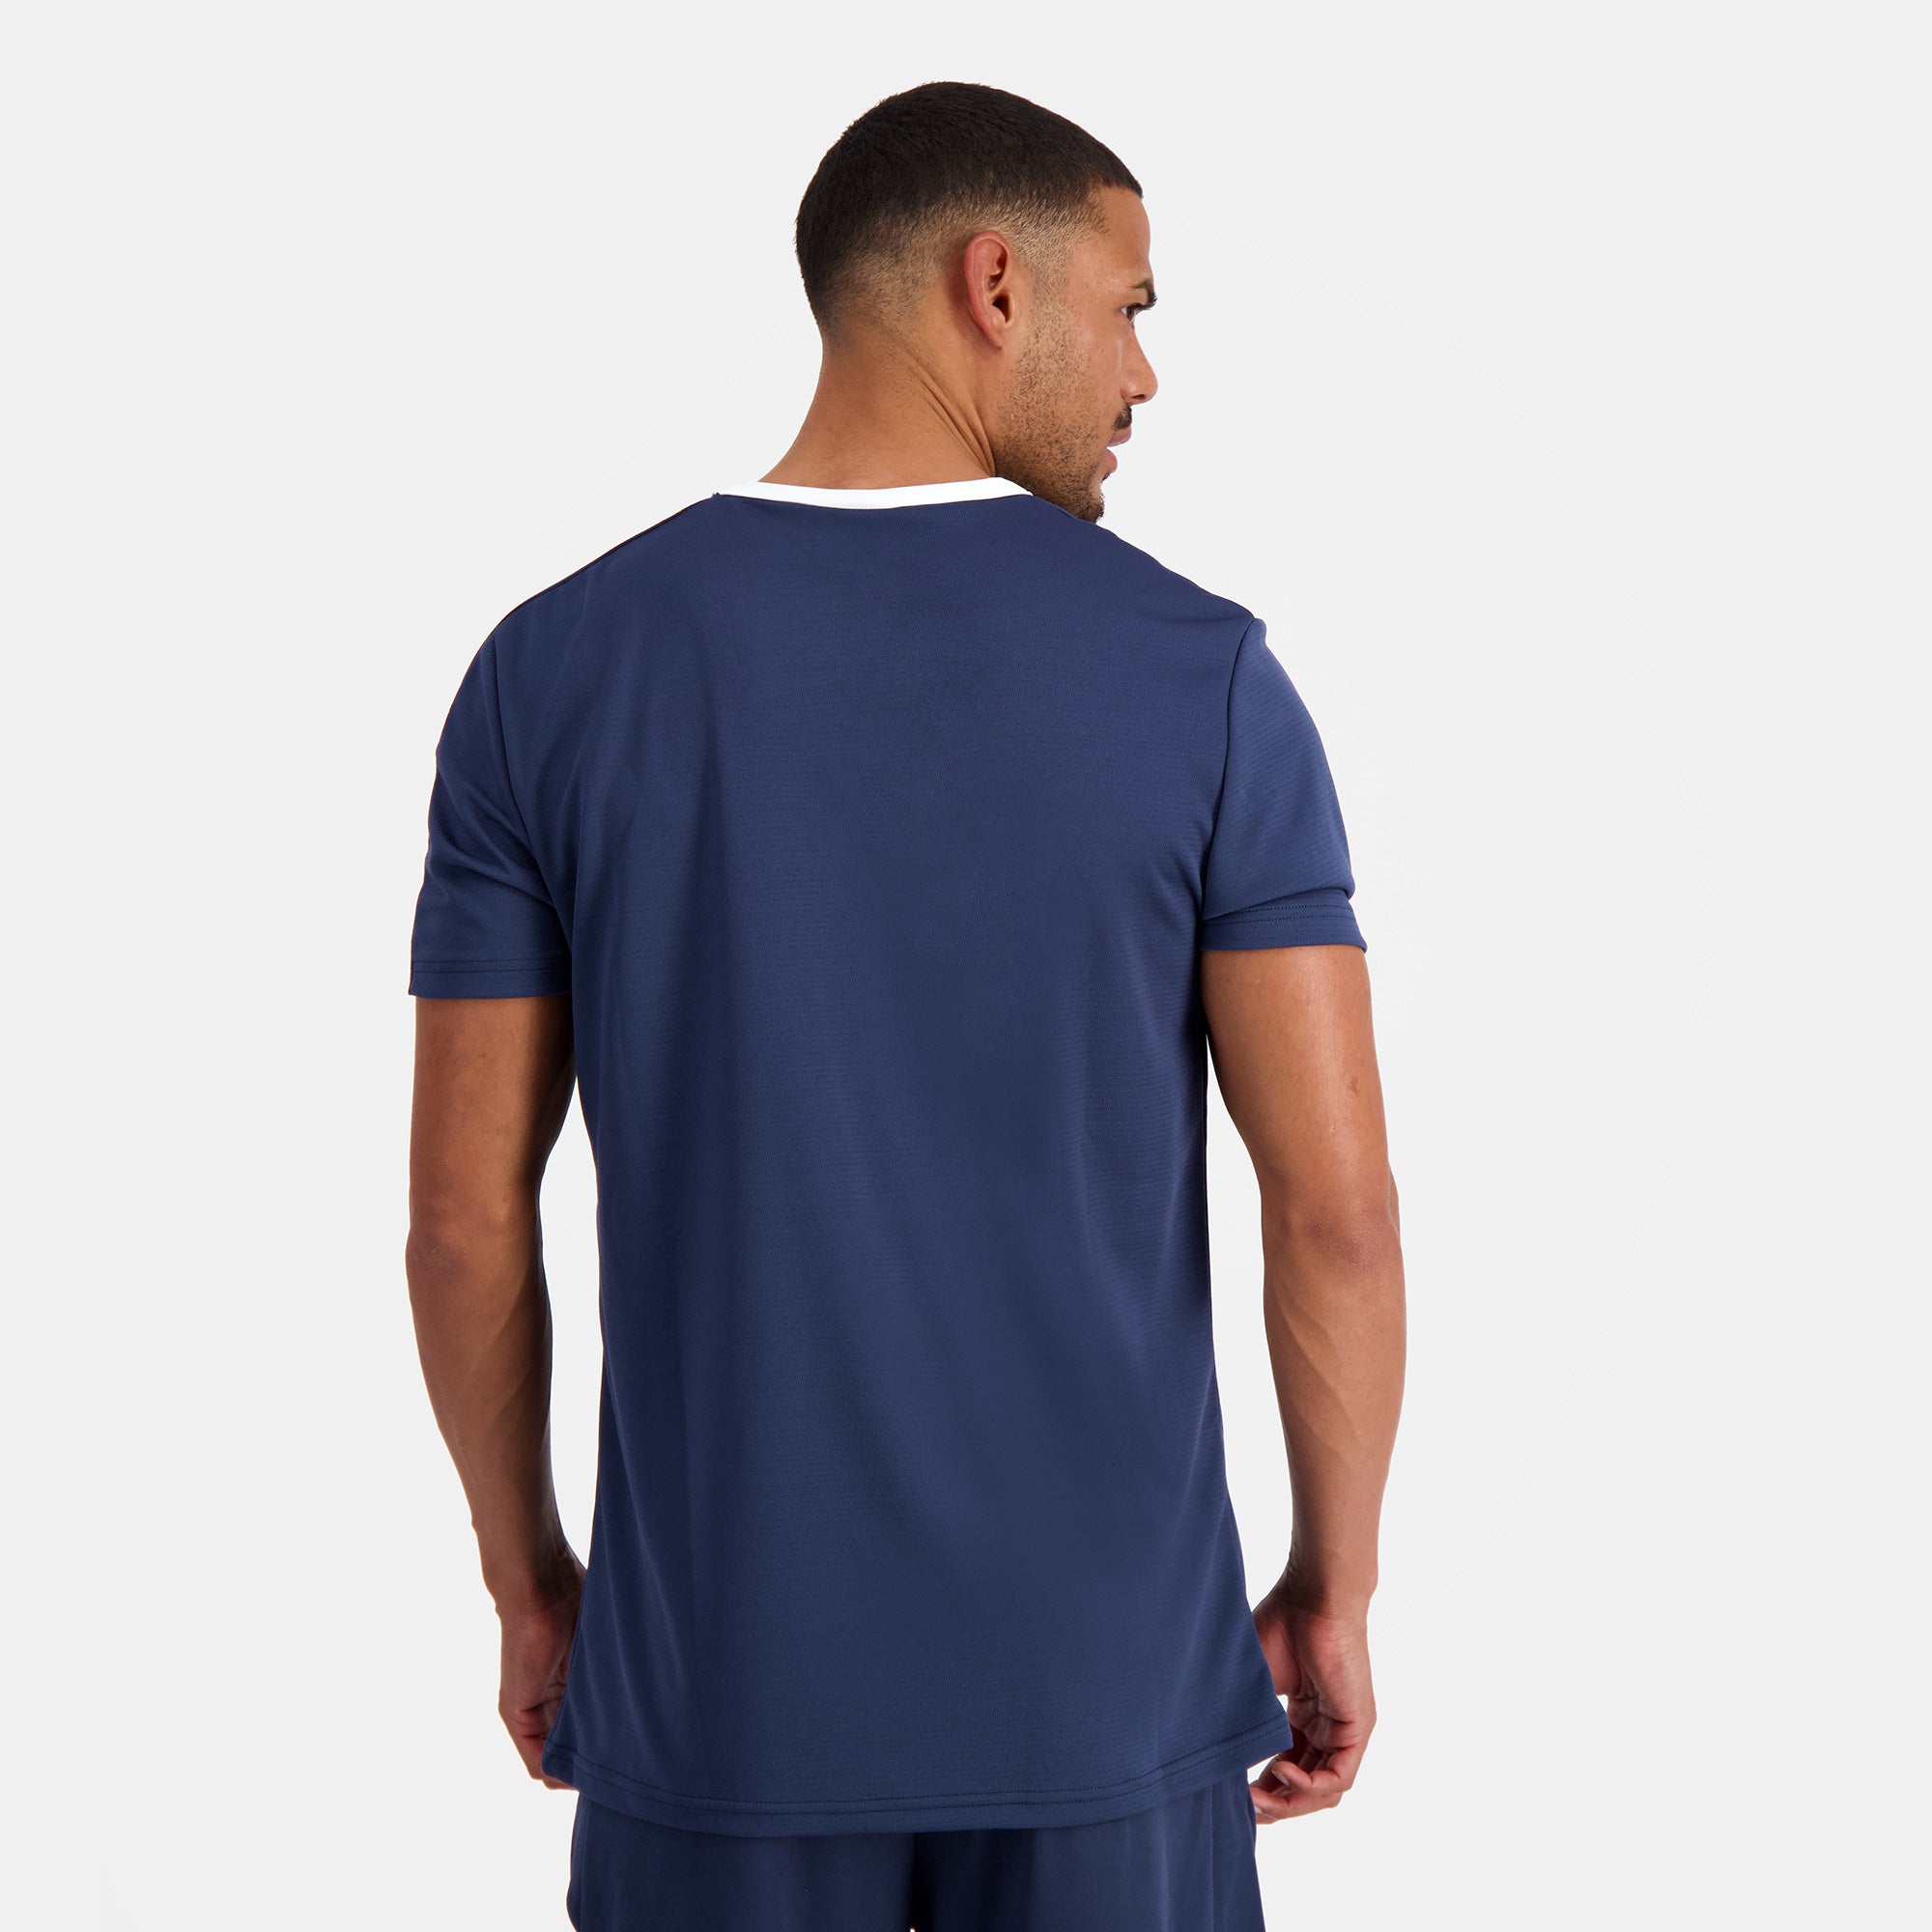 2220020-N°1 TRAINING Tee SS M dress blues | T-shirt Homme